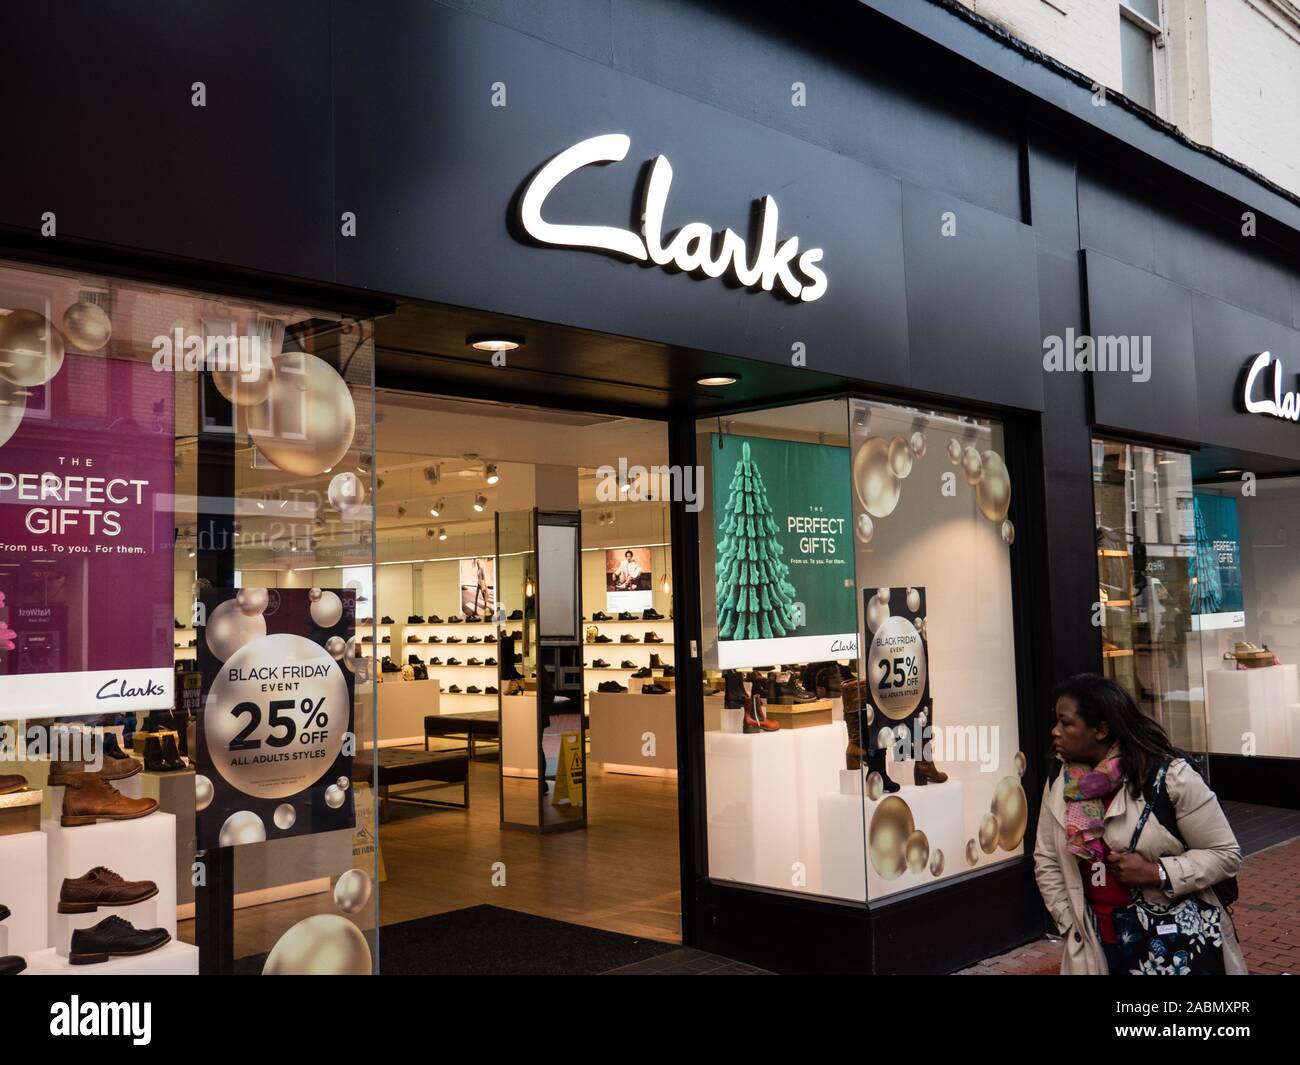 Magasin de chaussures Clarks, Reading, Berkshire, England, UK,GO Photo  Stock - Alamy